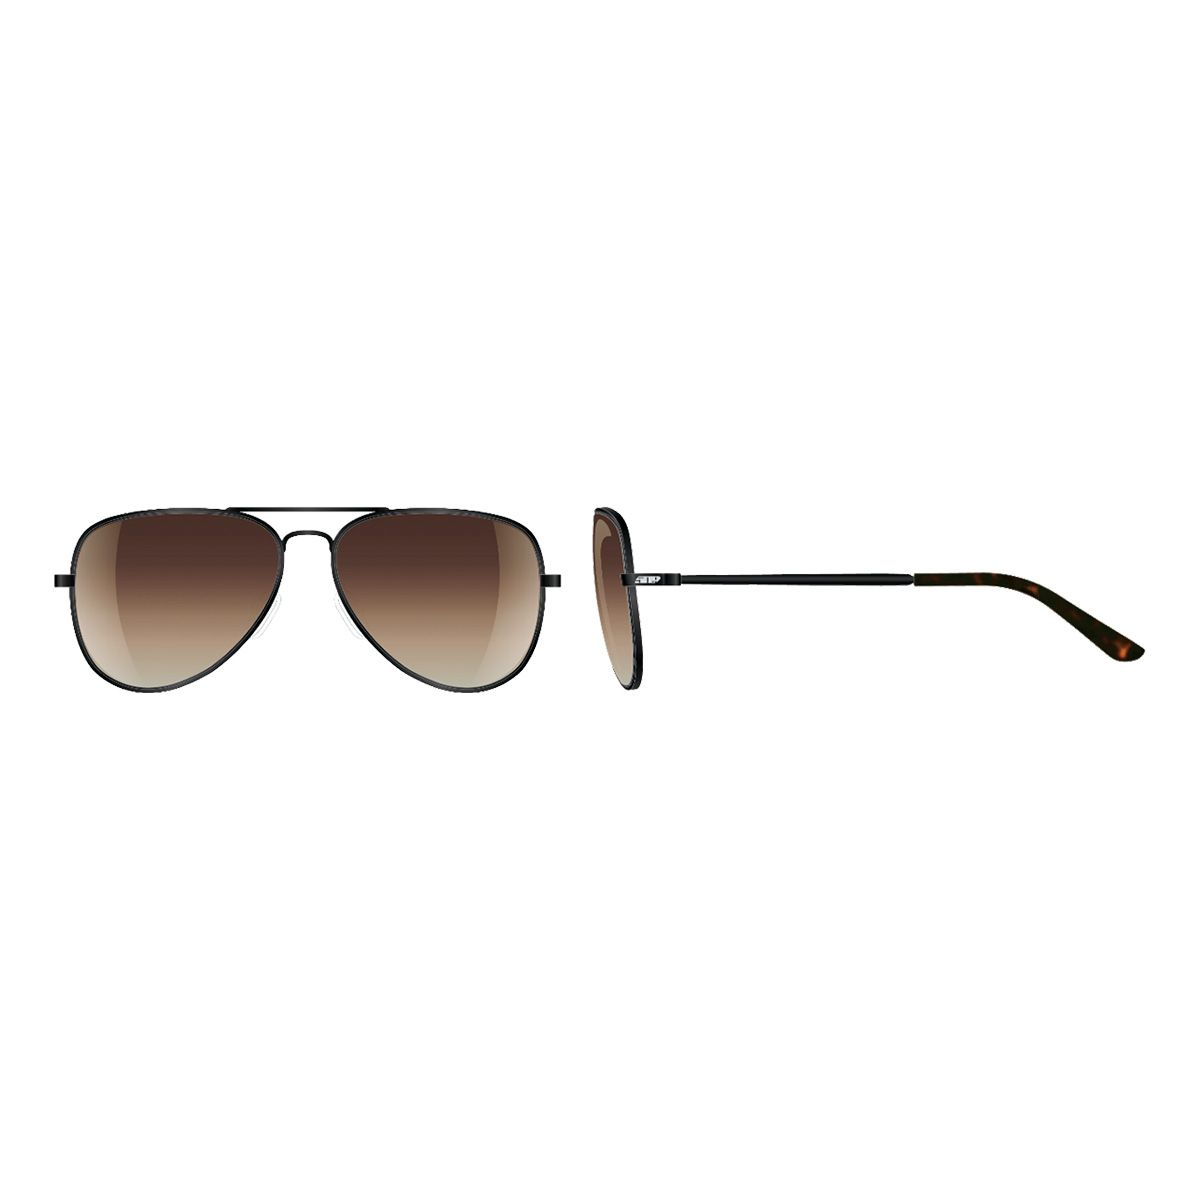 509 sunglasses adult authority sunglasses - casual